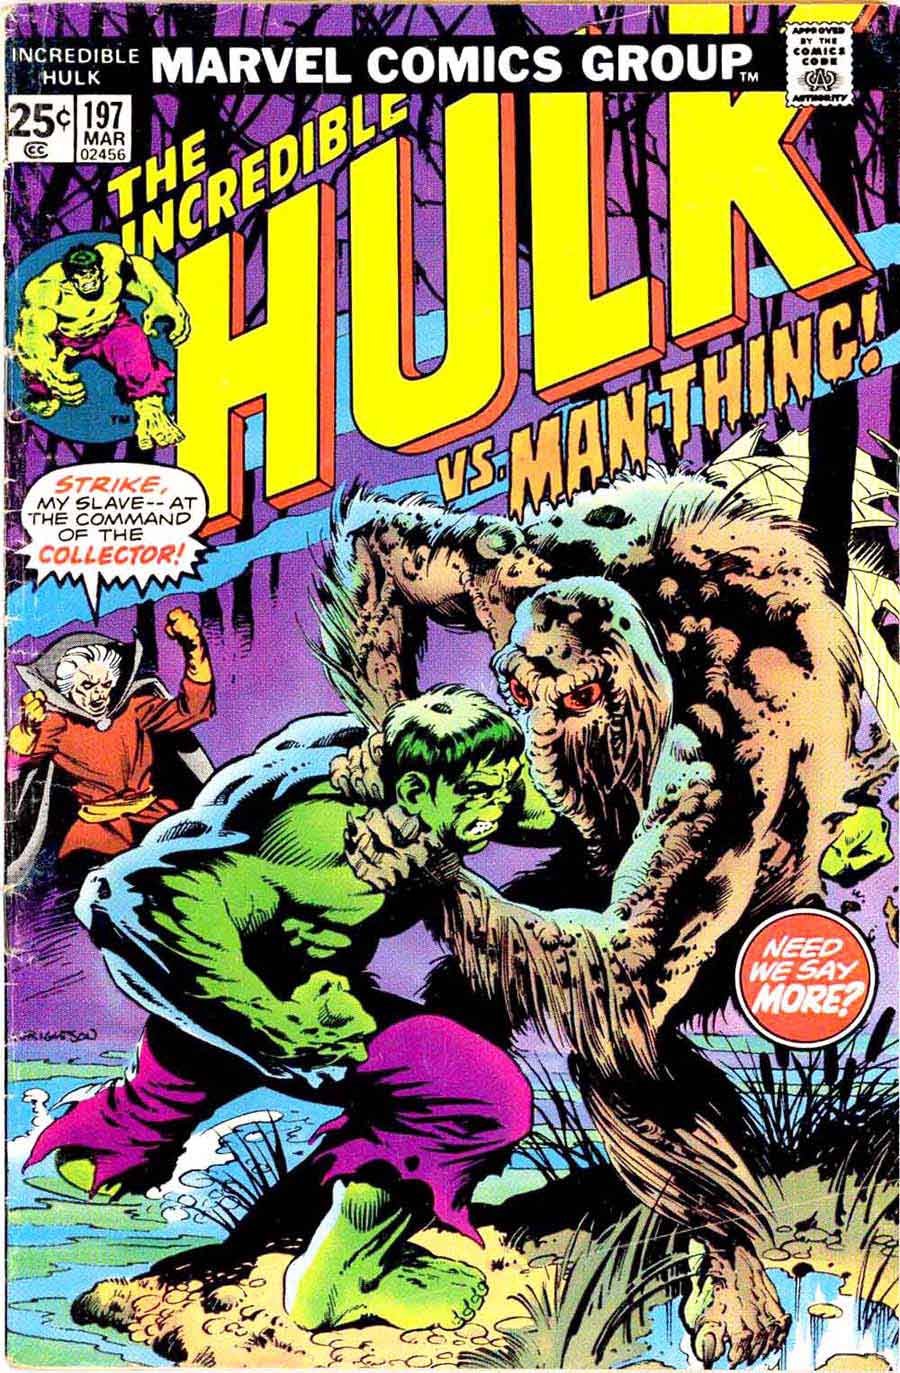 Incredible Hulk v2 #197 marvel comic book cover art by Bernie Wrightson